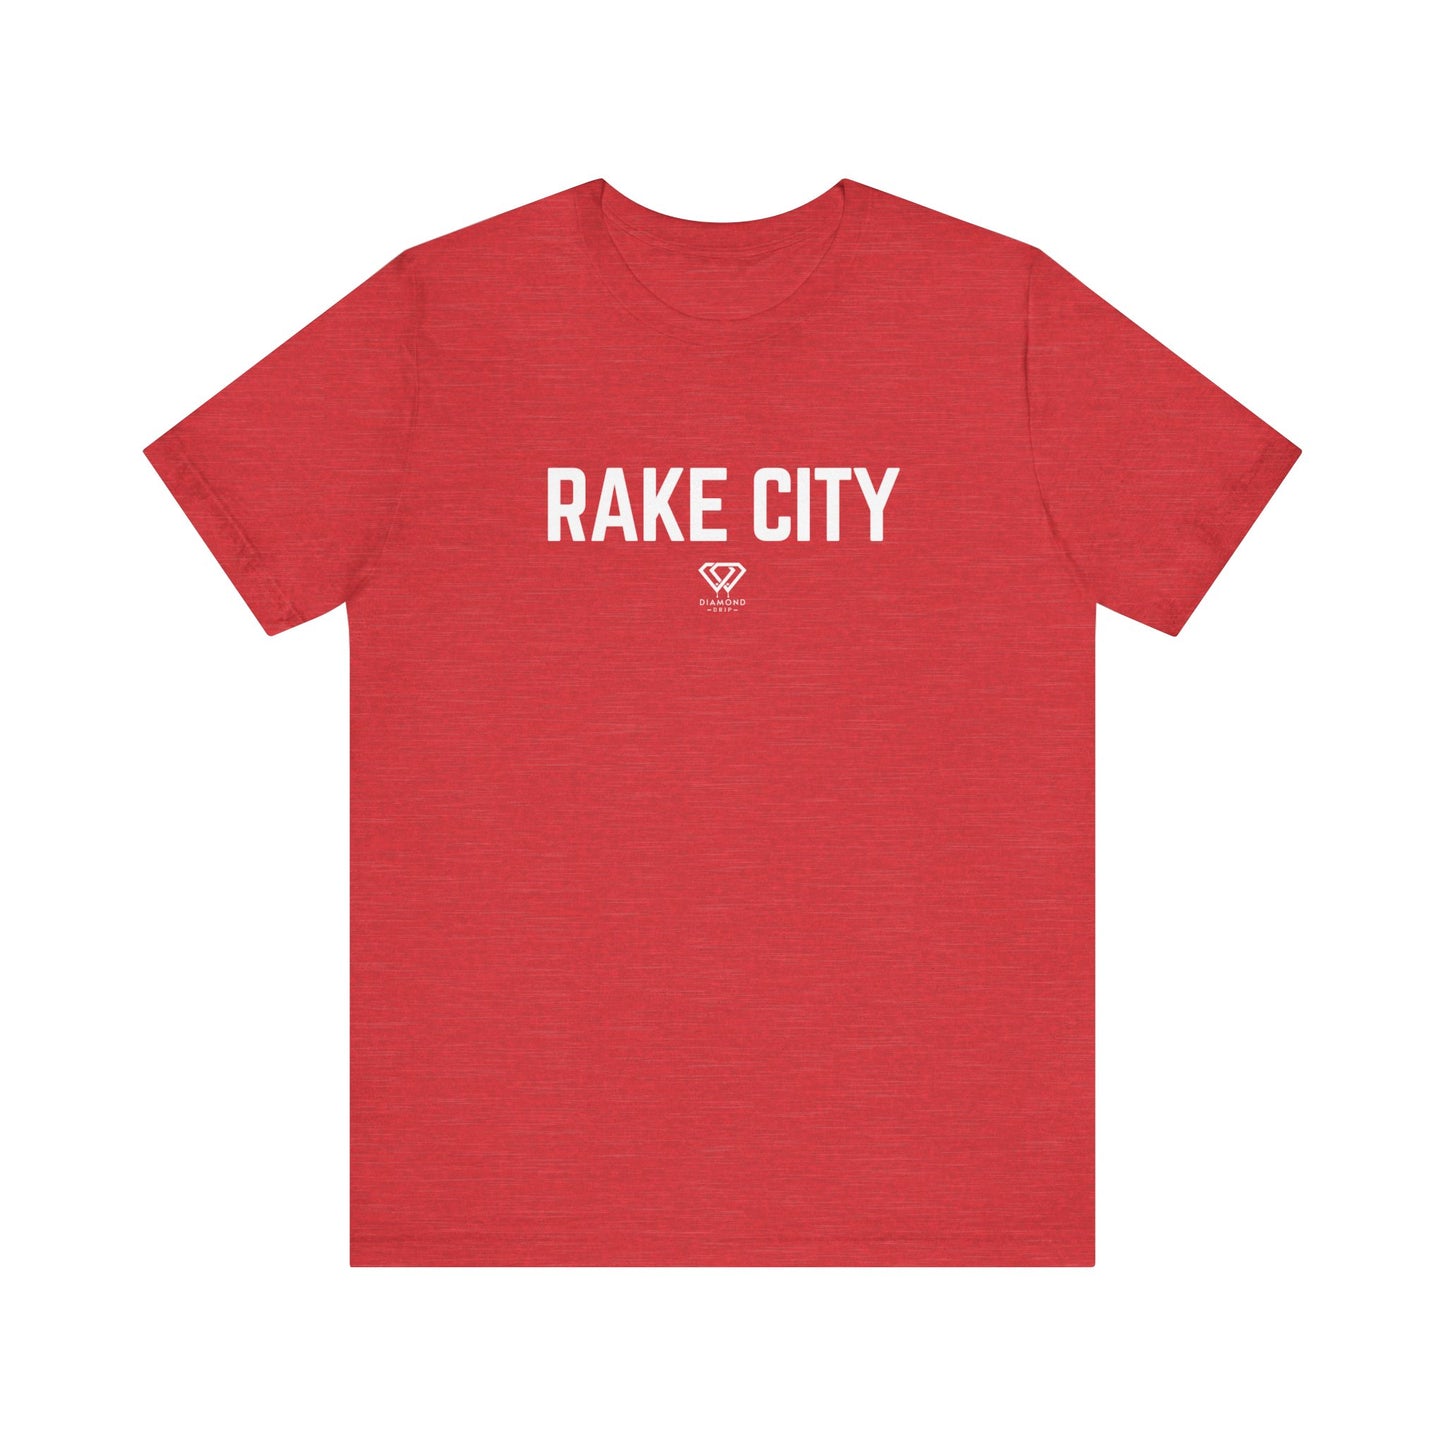 Rake City